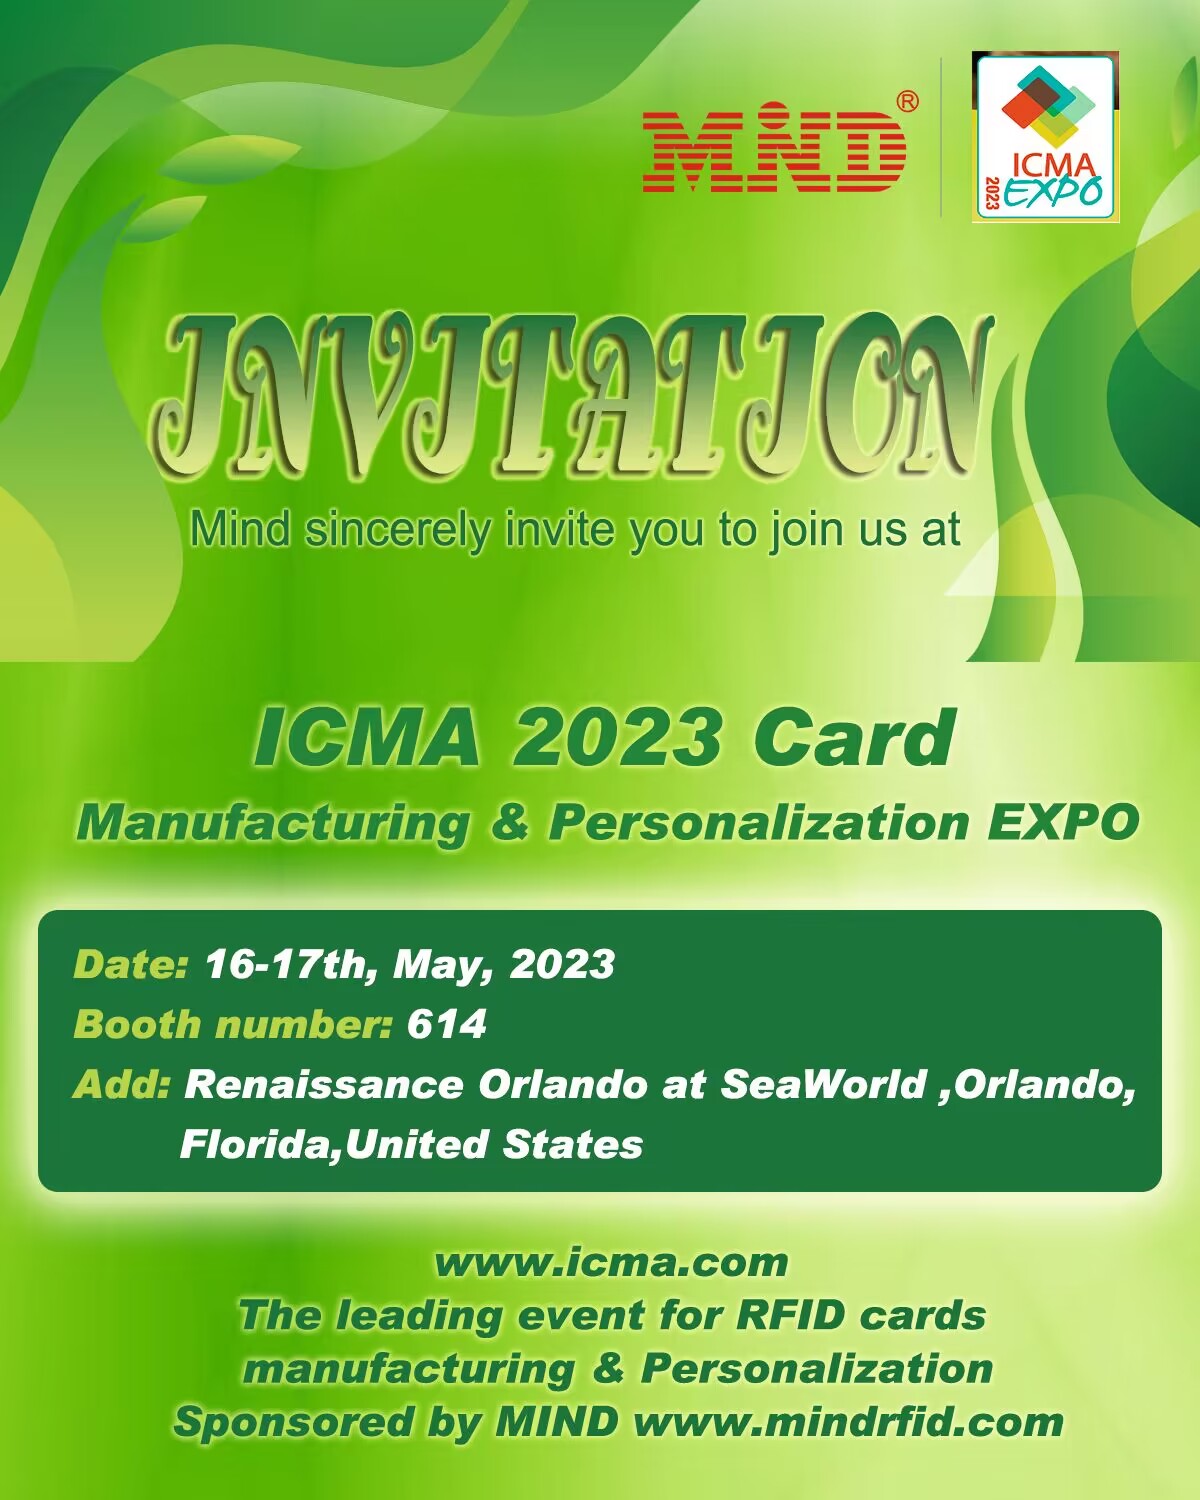 ICMA 2023 ڪارڊ ٺاھڻ ۽ ذاتي ڪرڻ EXPO.